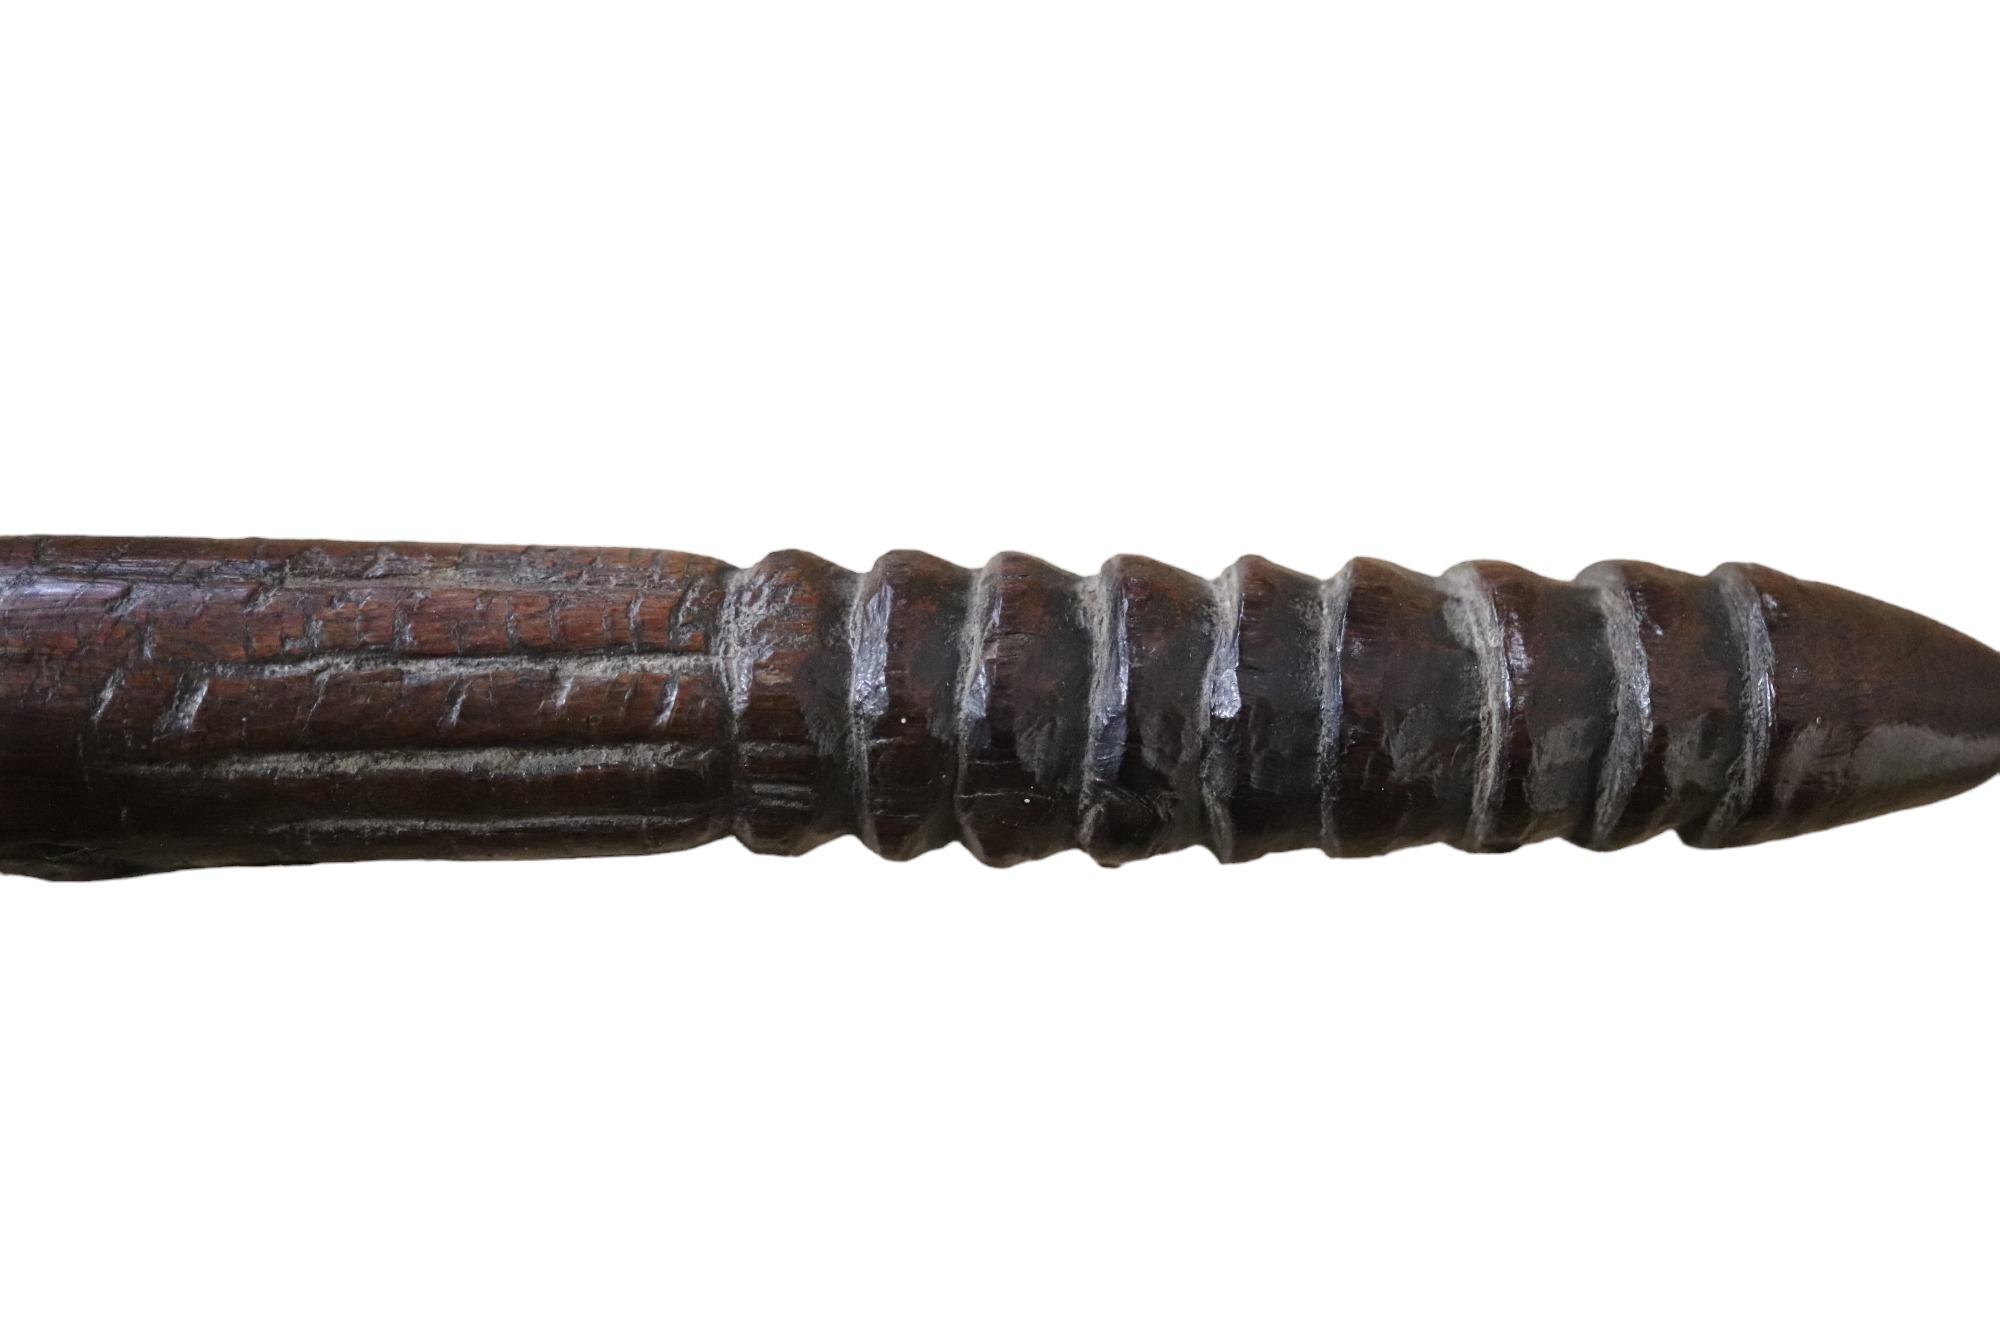 An Australian aboriginal waddy cluck / digging stick, 56 cm - Image 7 of 11